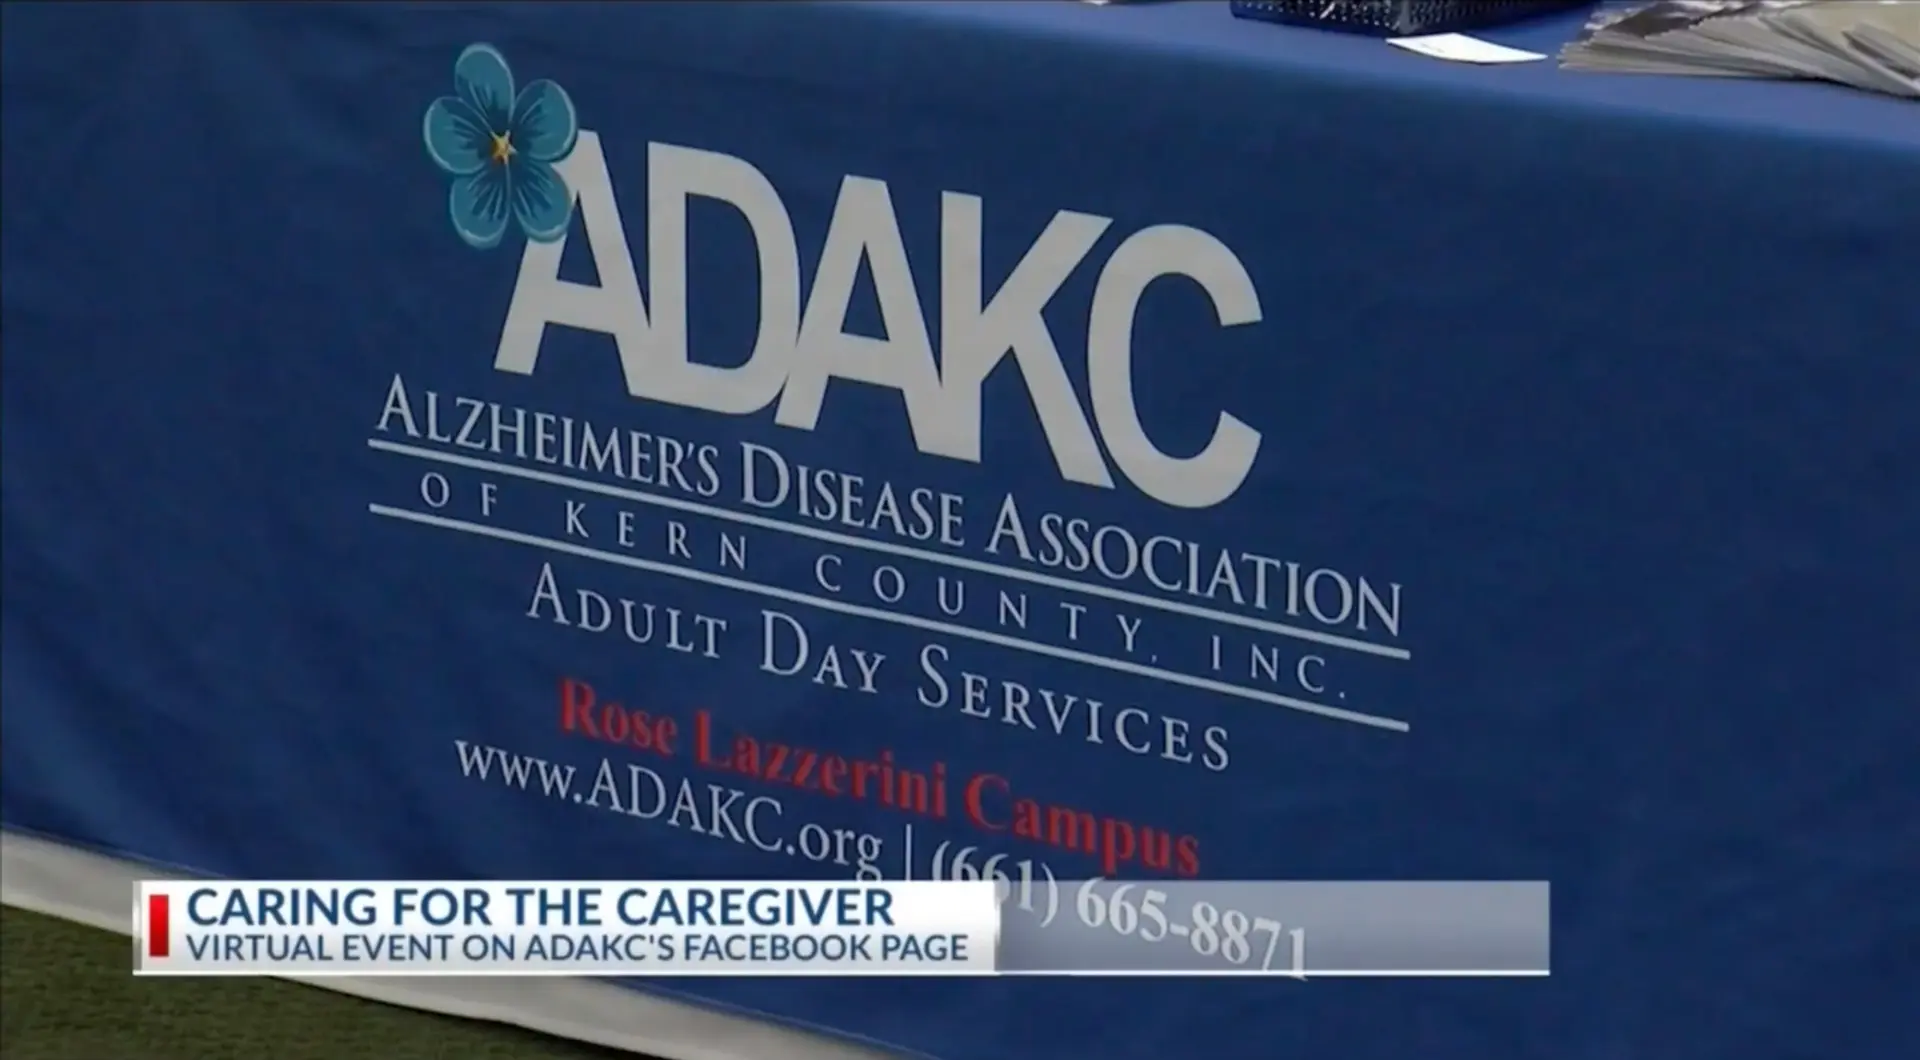 ADAKC event focuses on caregivers of Alzheimer's patients